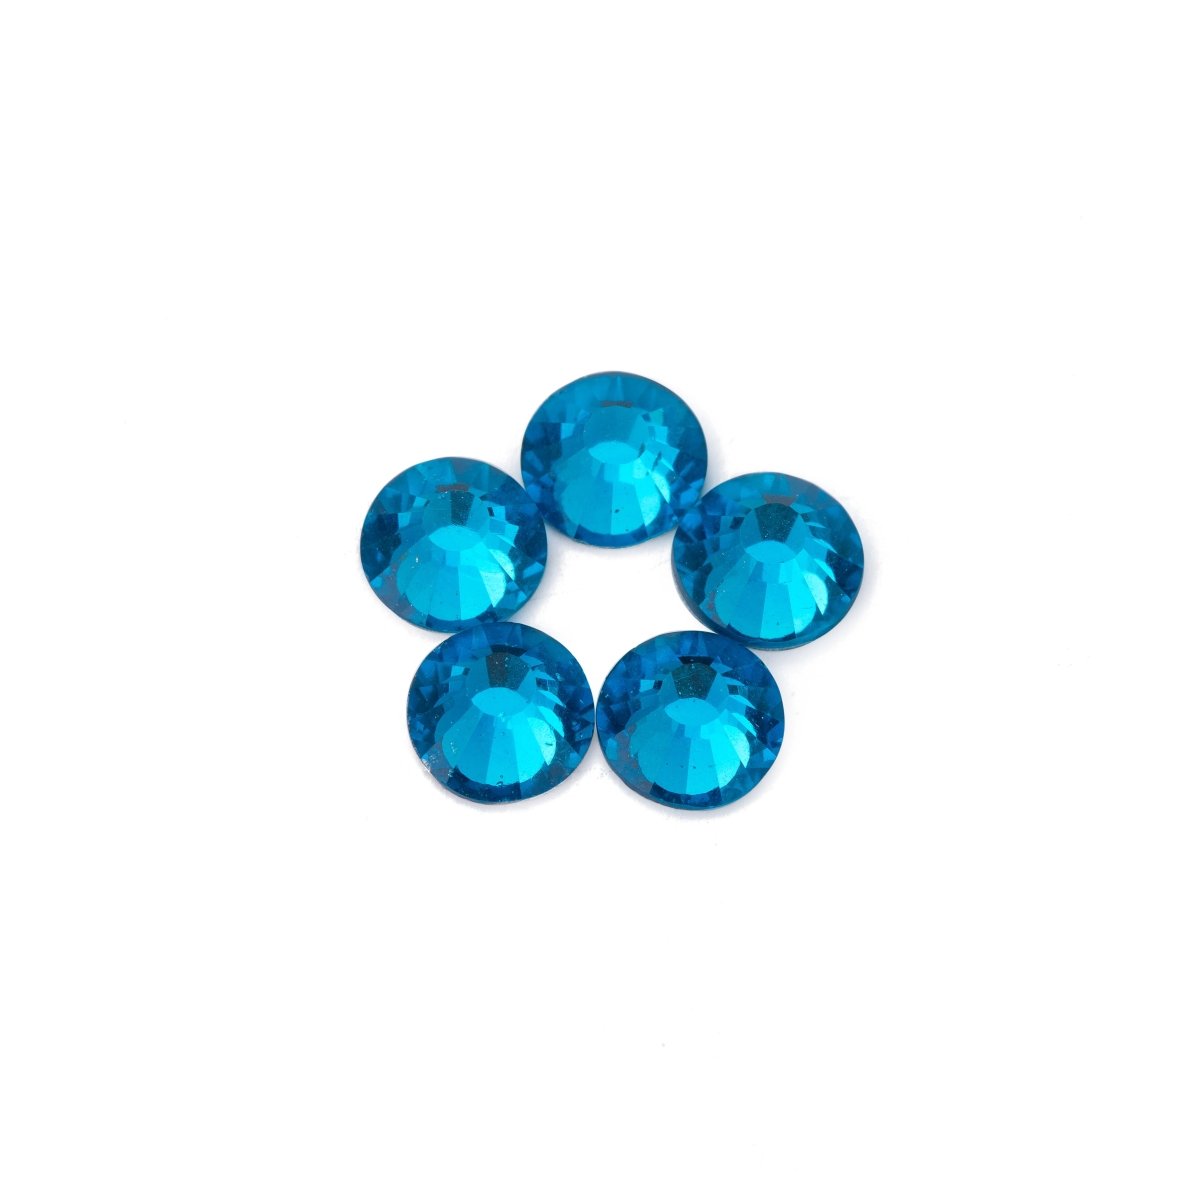 720 pcs Mixed Size ss6-ss30 Crystal Teal Blue / Blue Zircon #229 - DLUXCA